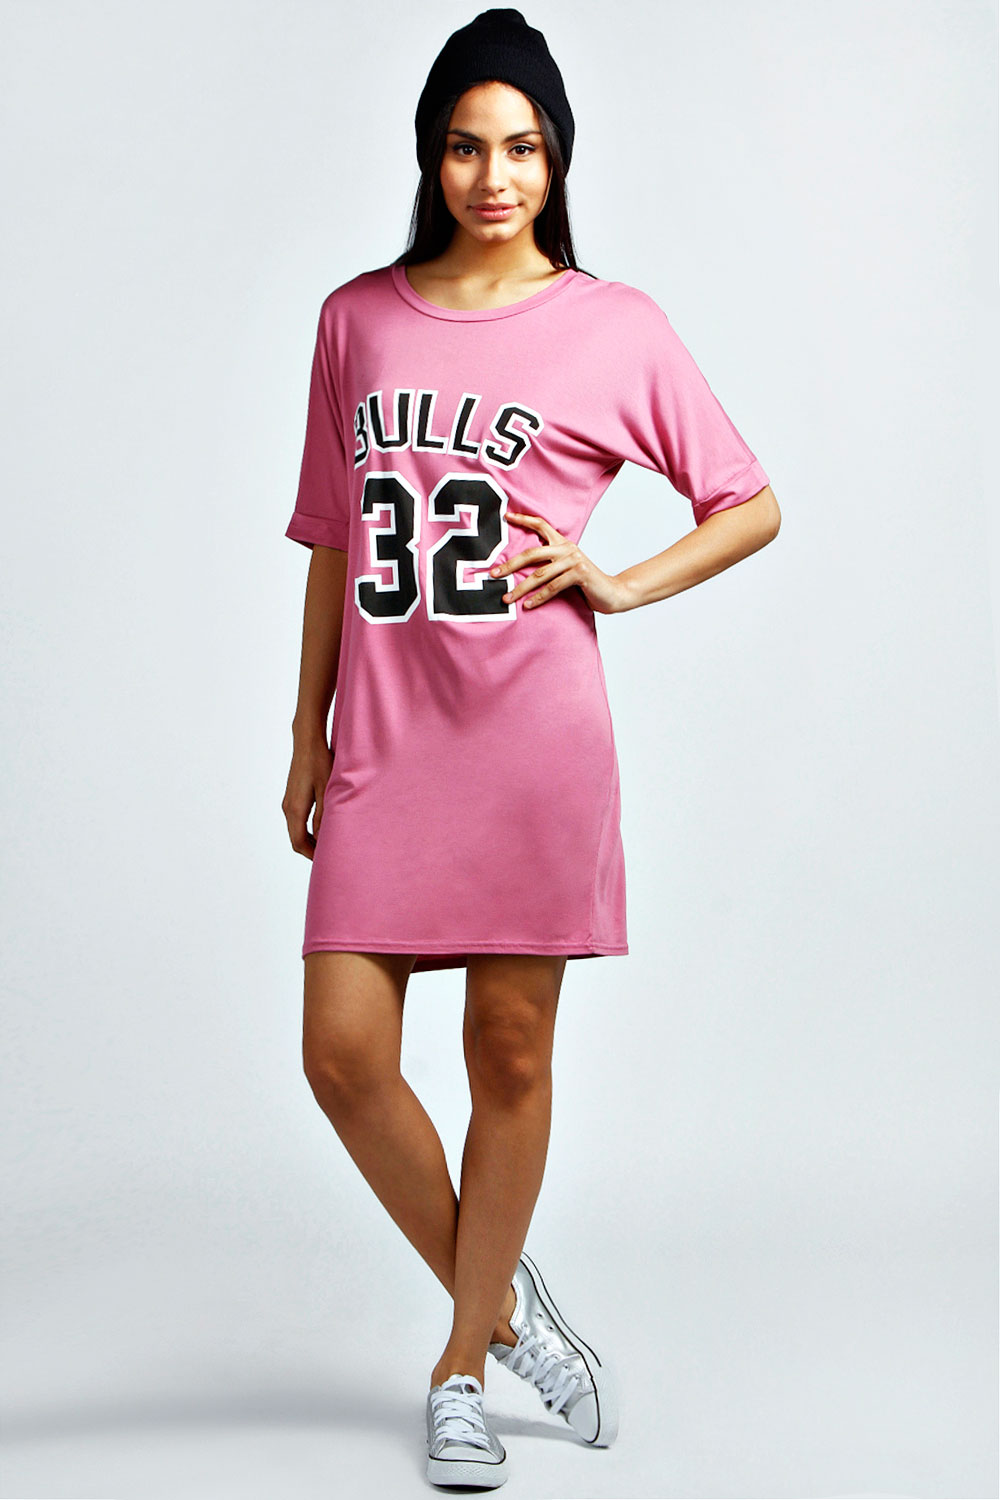 boohoo Nadine Bulls 32 T-Shirt Dress - rose pink